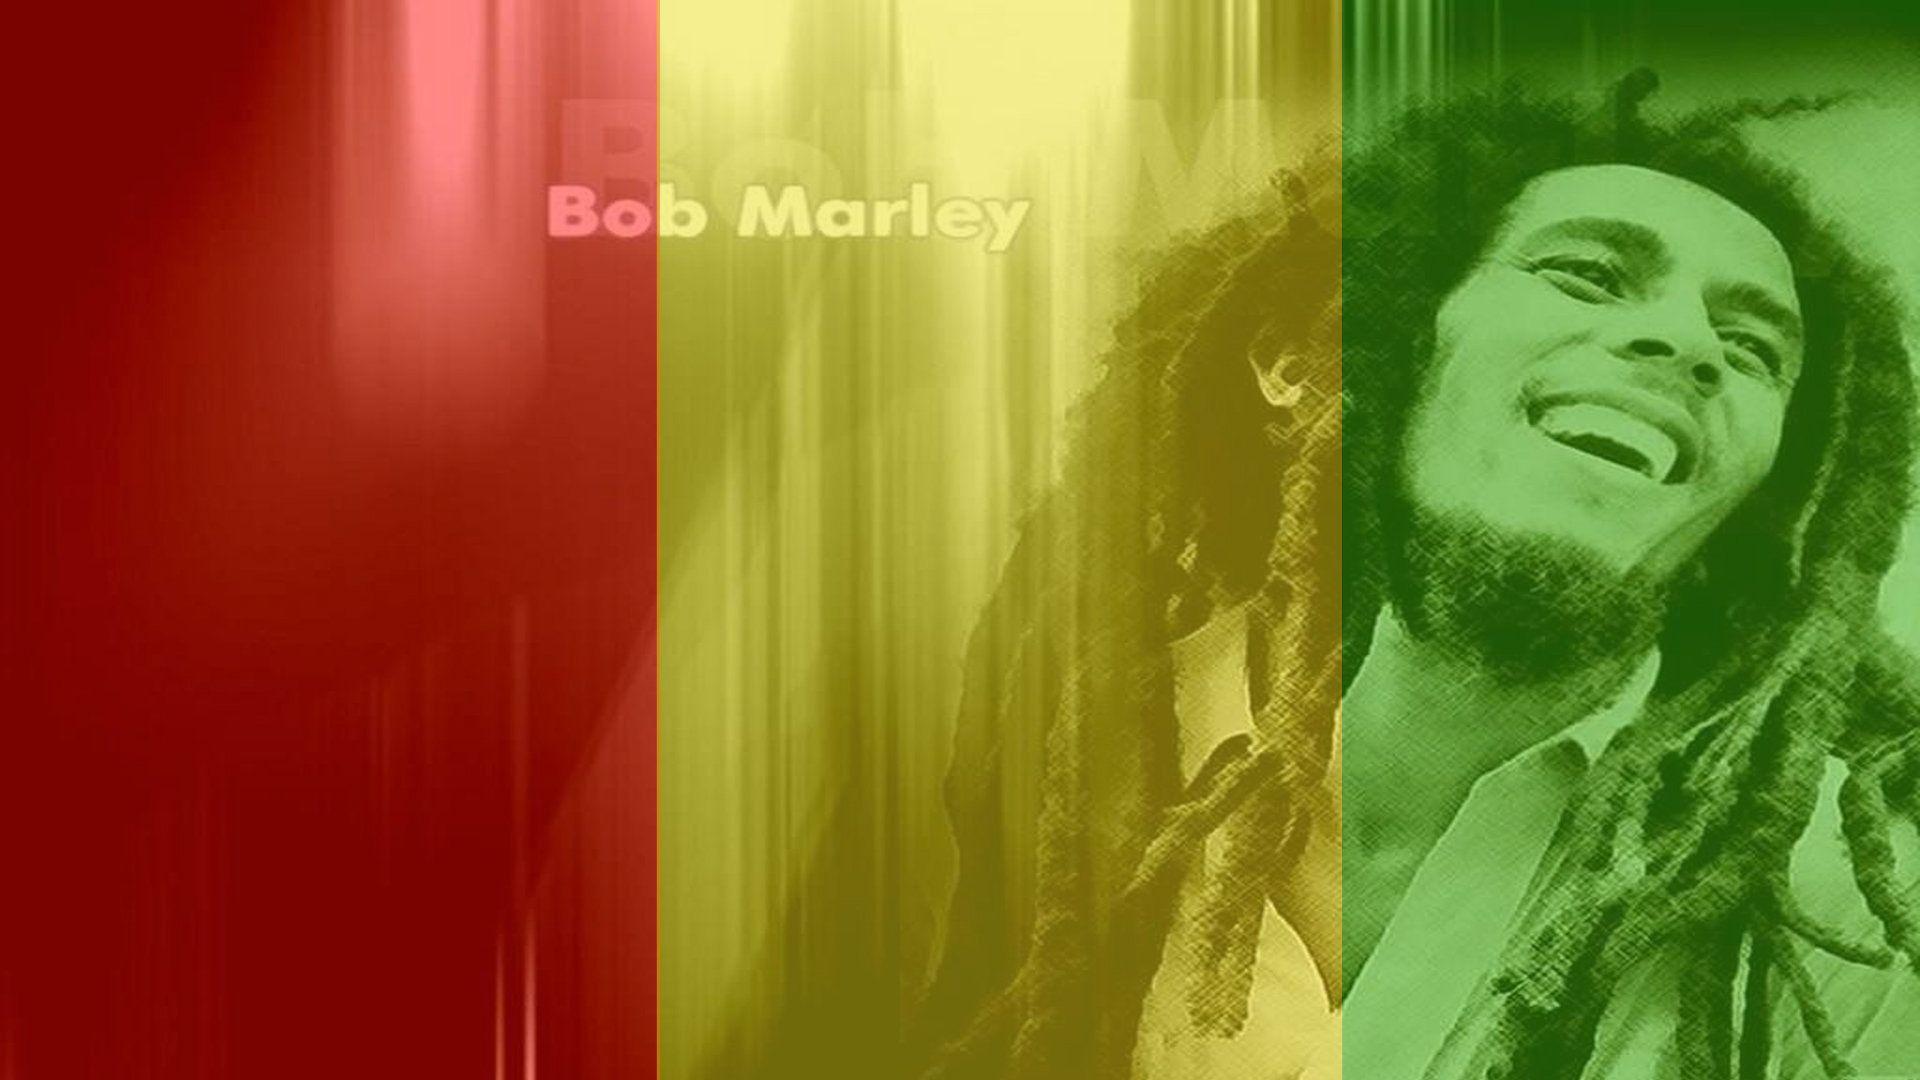 Wallpaper For > Bob Marley Wallpaper HD 1920x1080